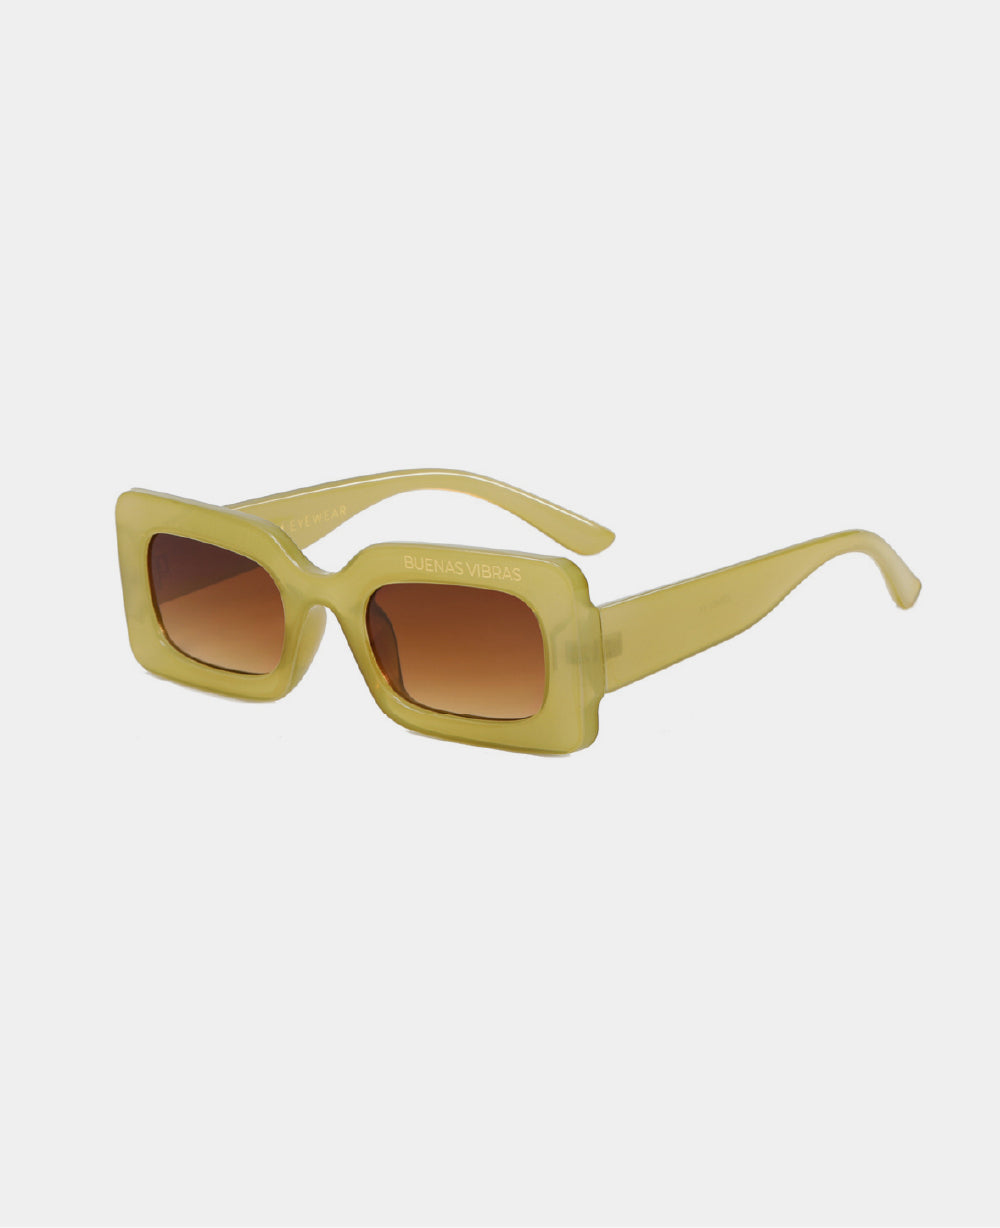 Buenas Vibras Sunglasses by Gleam Eyewear